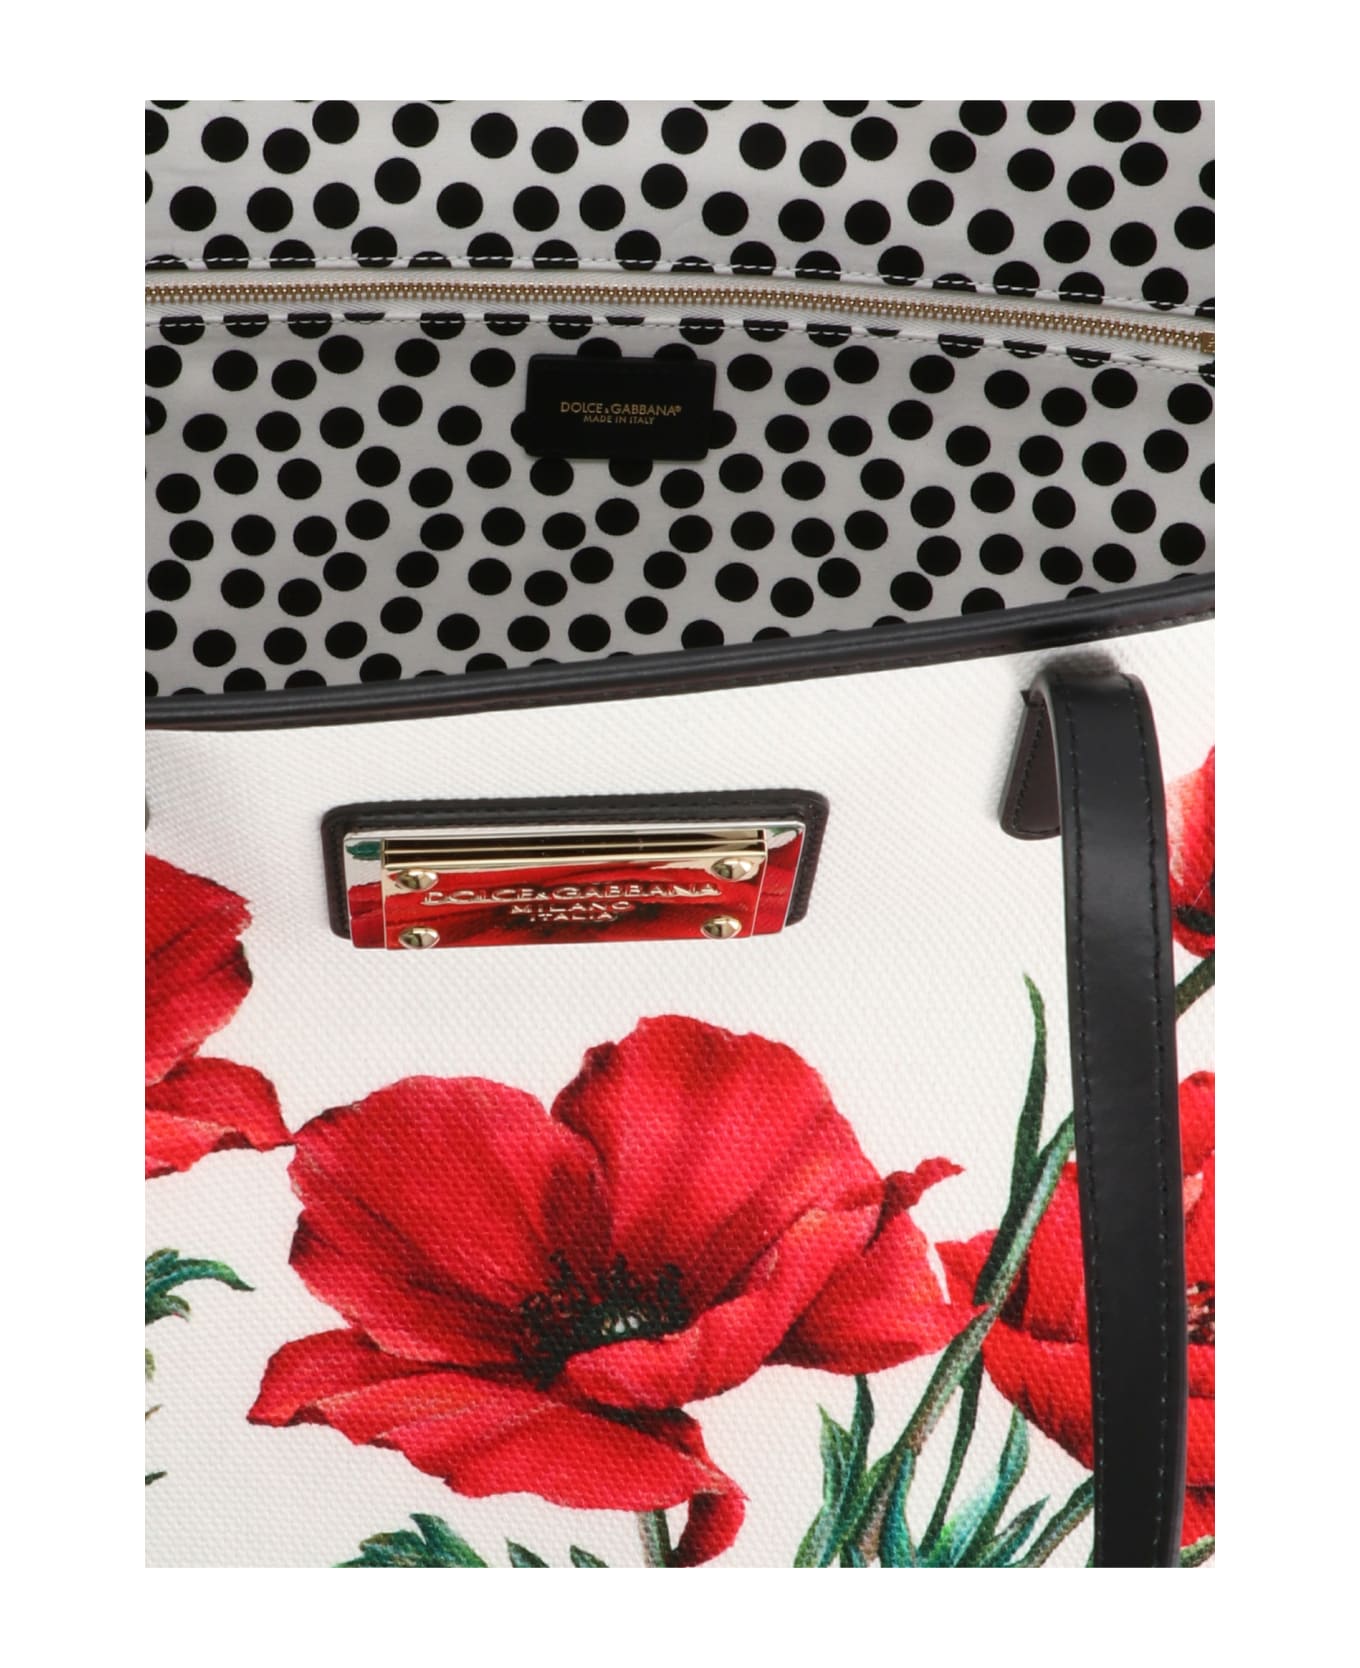 Dolce & Gabbana Floral Canvas Shopping Bag - Bianco